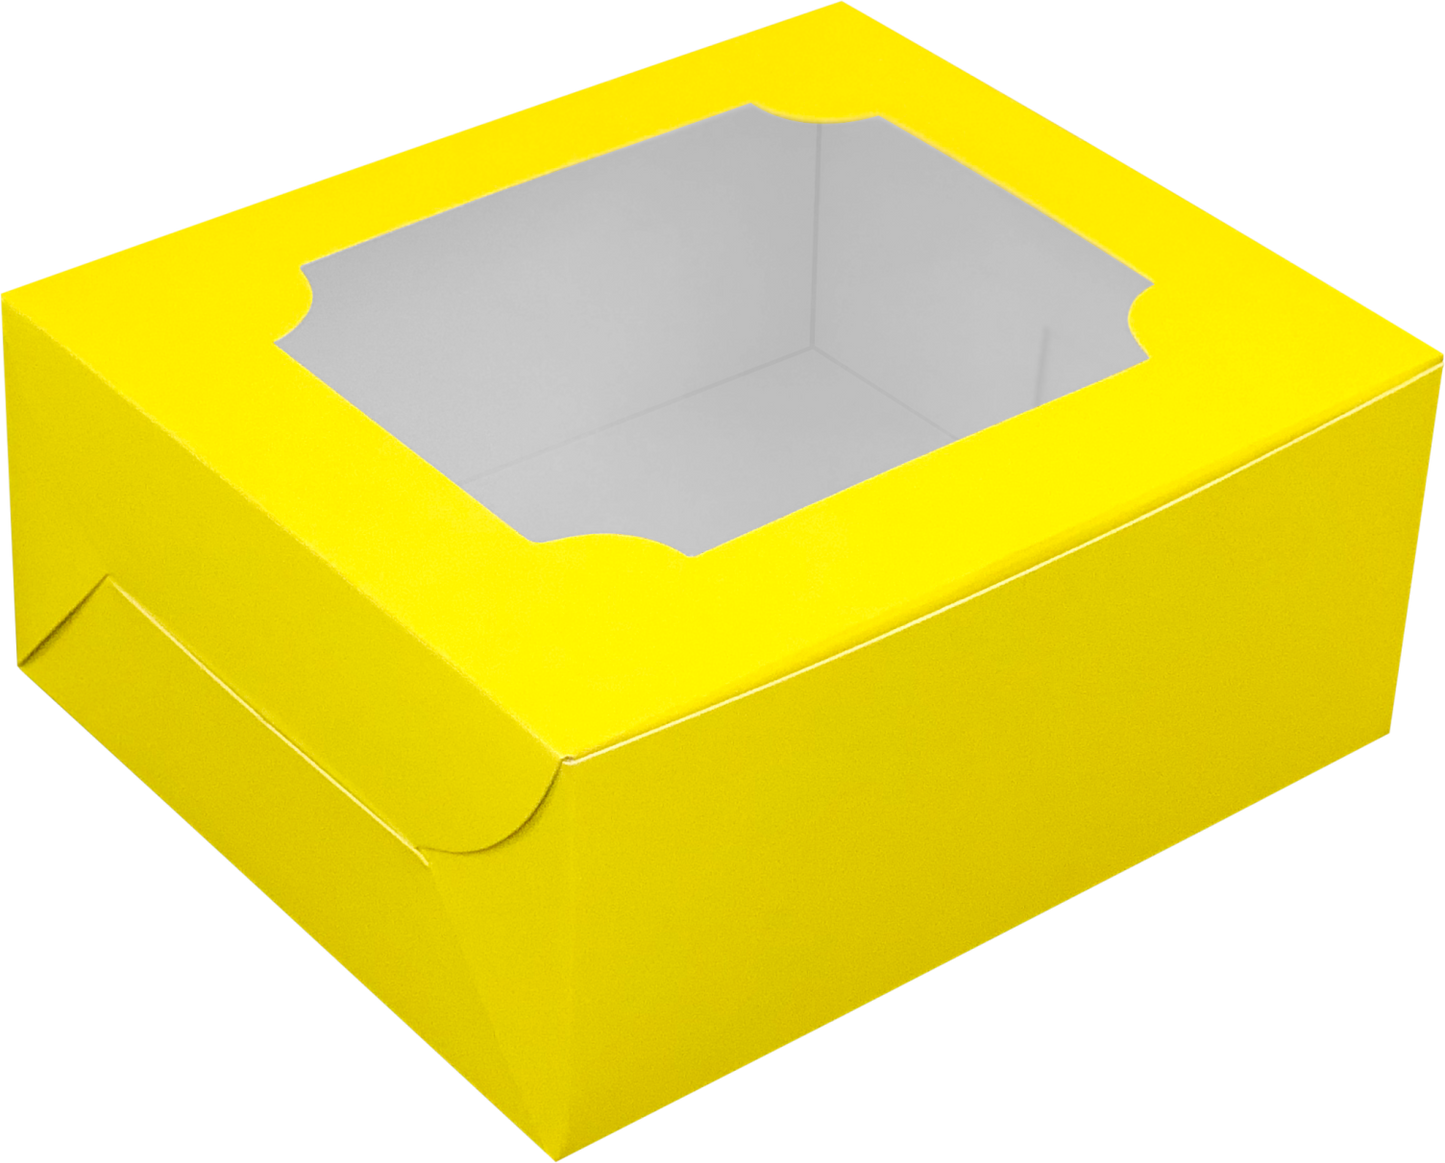 DONUT BOX (7x6x3 INCHES)